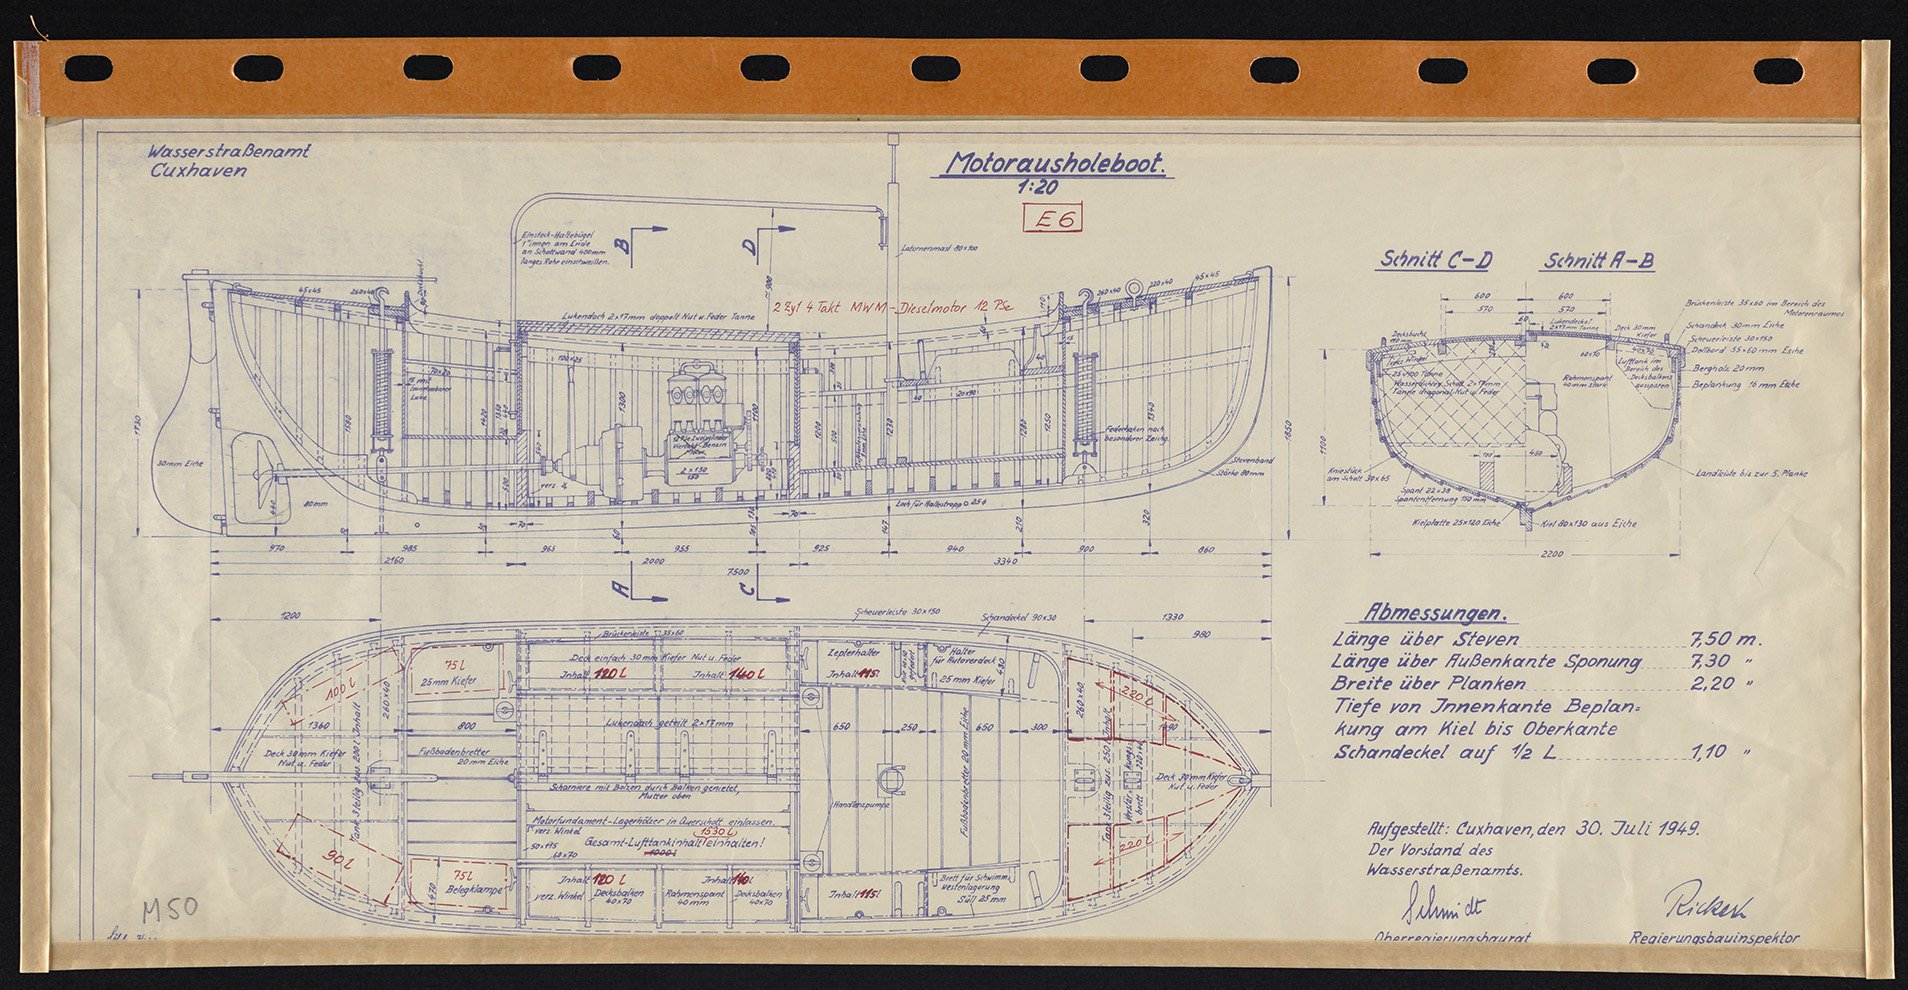 Feuerschiff Bürgermeister O'Swald II (ELBE I) - "Motorausholeboot" - 30.07.1949 (Schiffahrtsmuseum Unterweser CC BY-NC-SA)